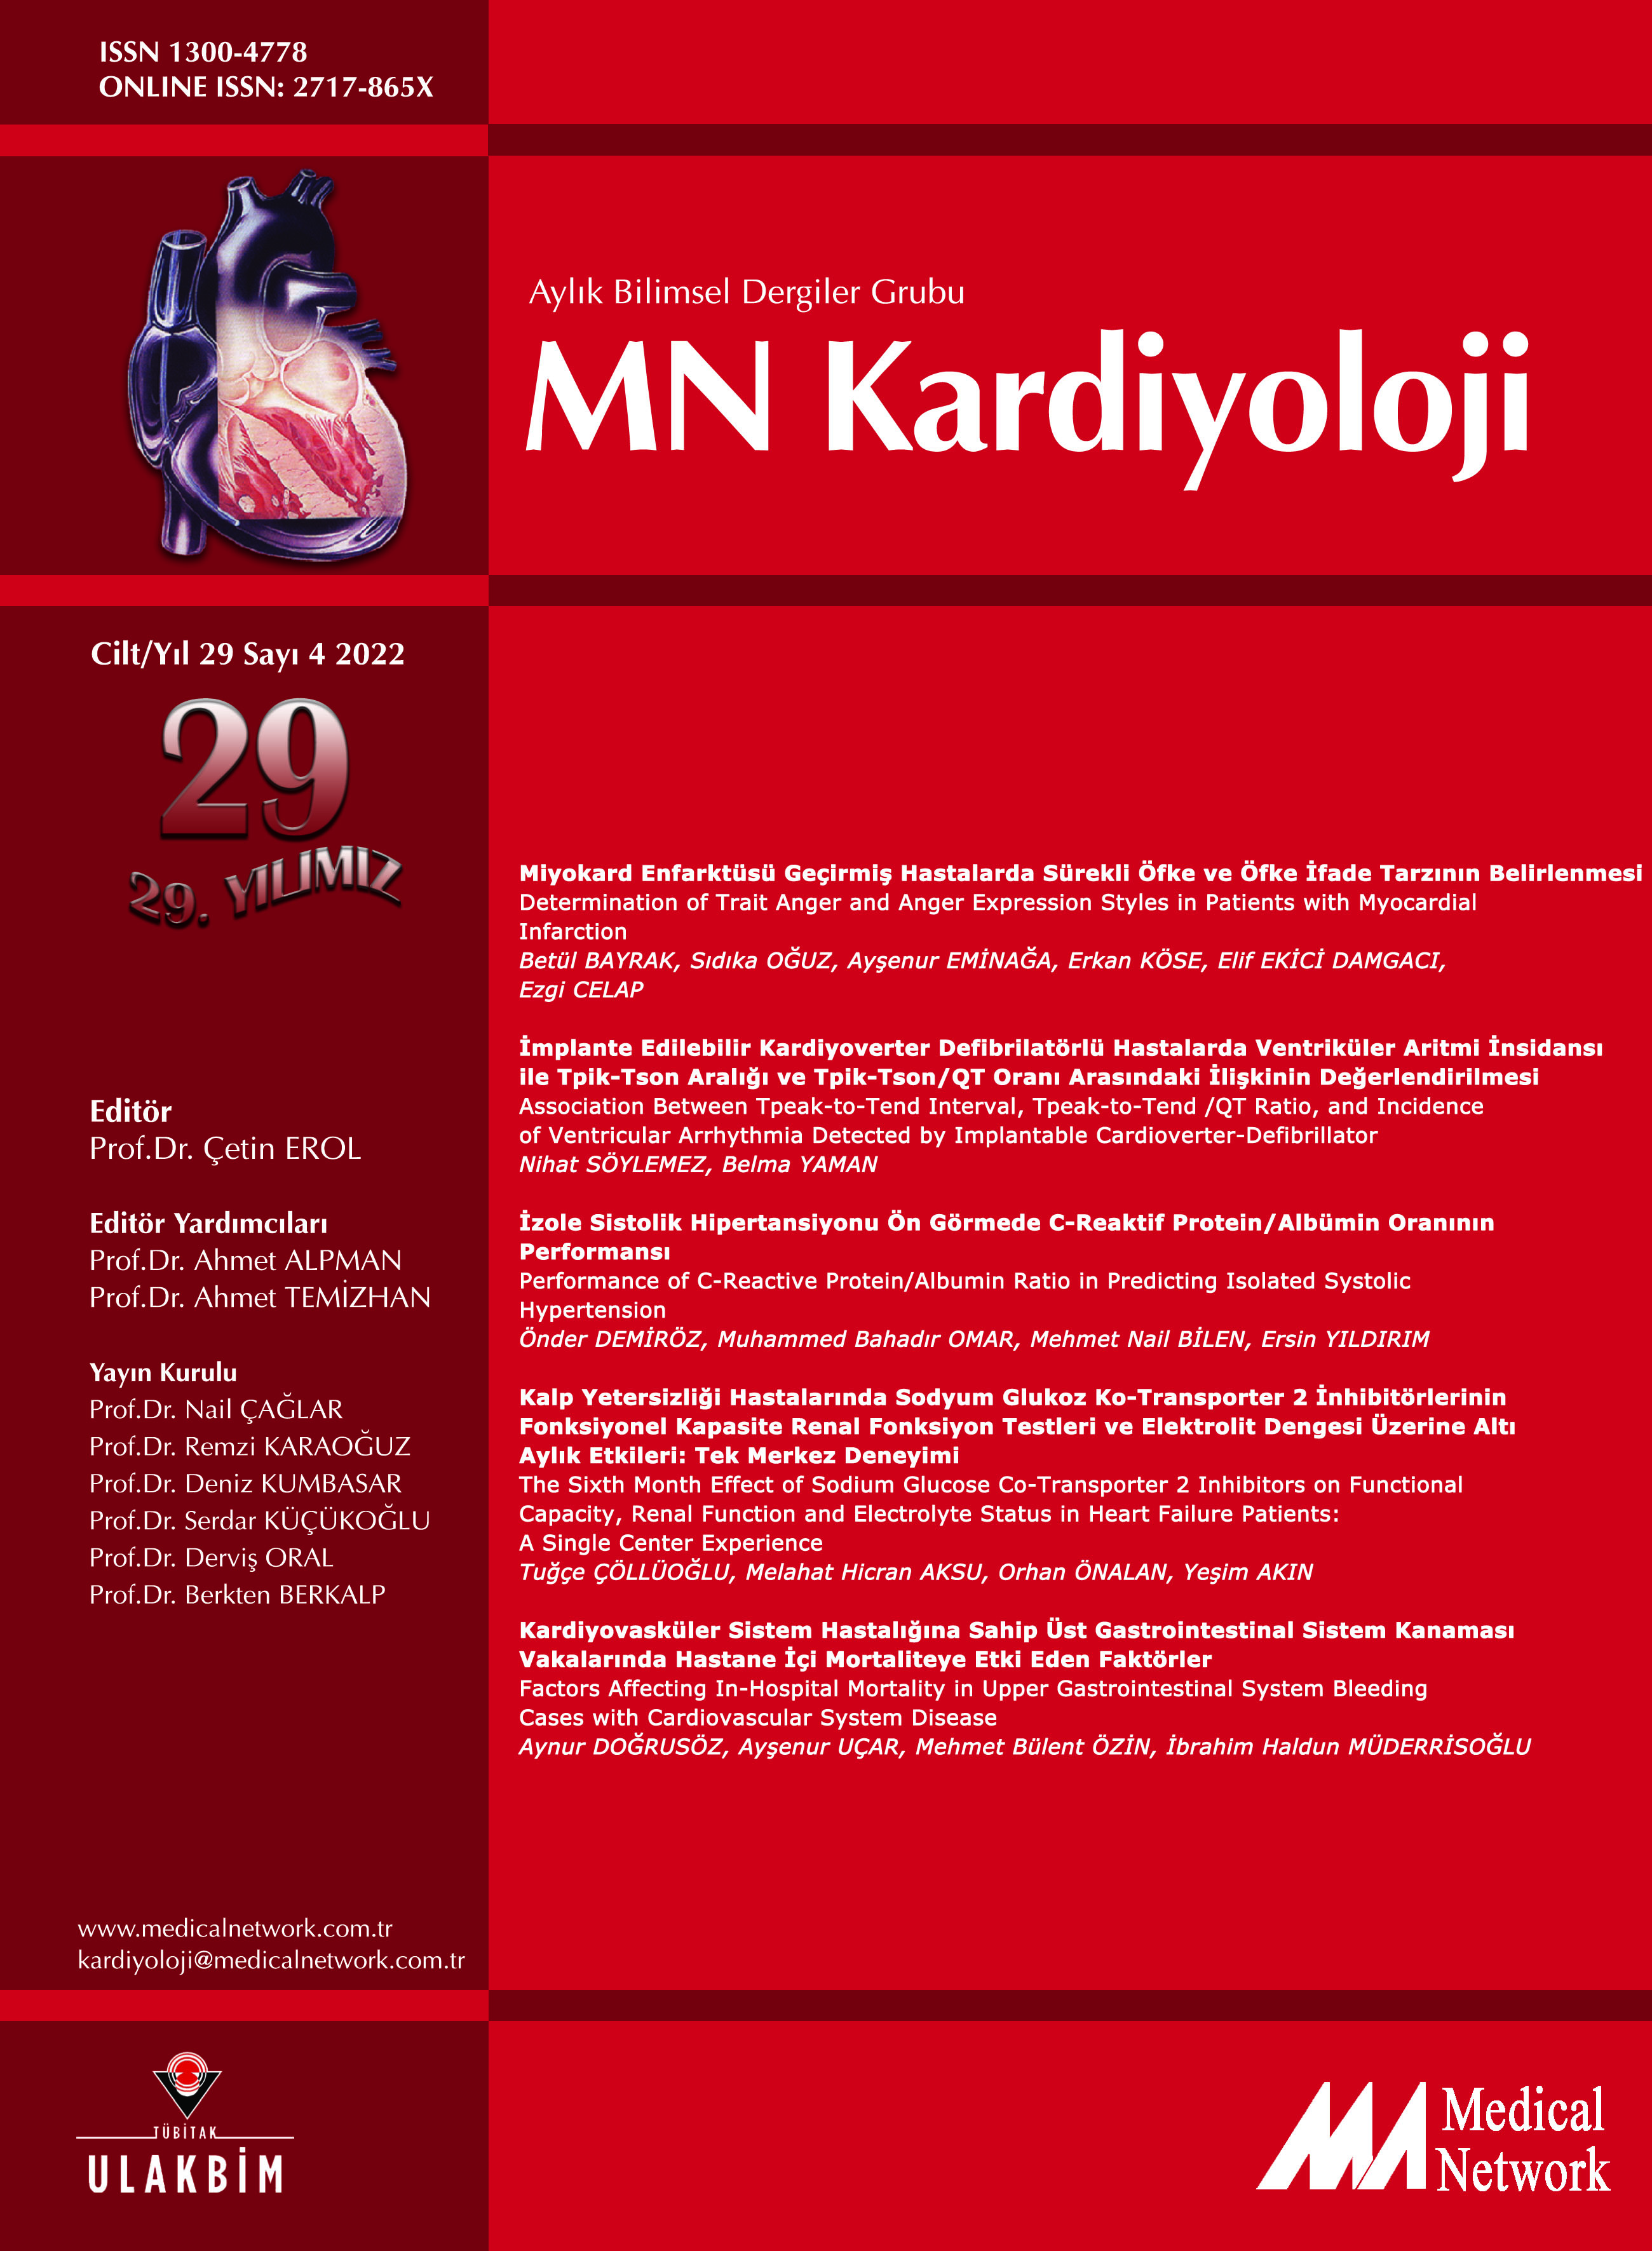 <p>MN Kardiyoloji Cilt: 29 Say: 4 2022 MN Cardiology Volume: 29 No: 4 2022</p>